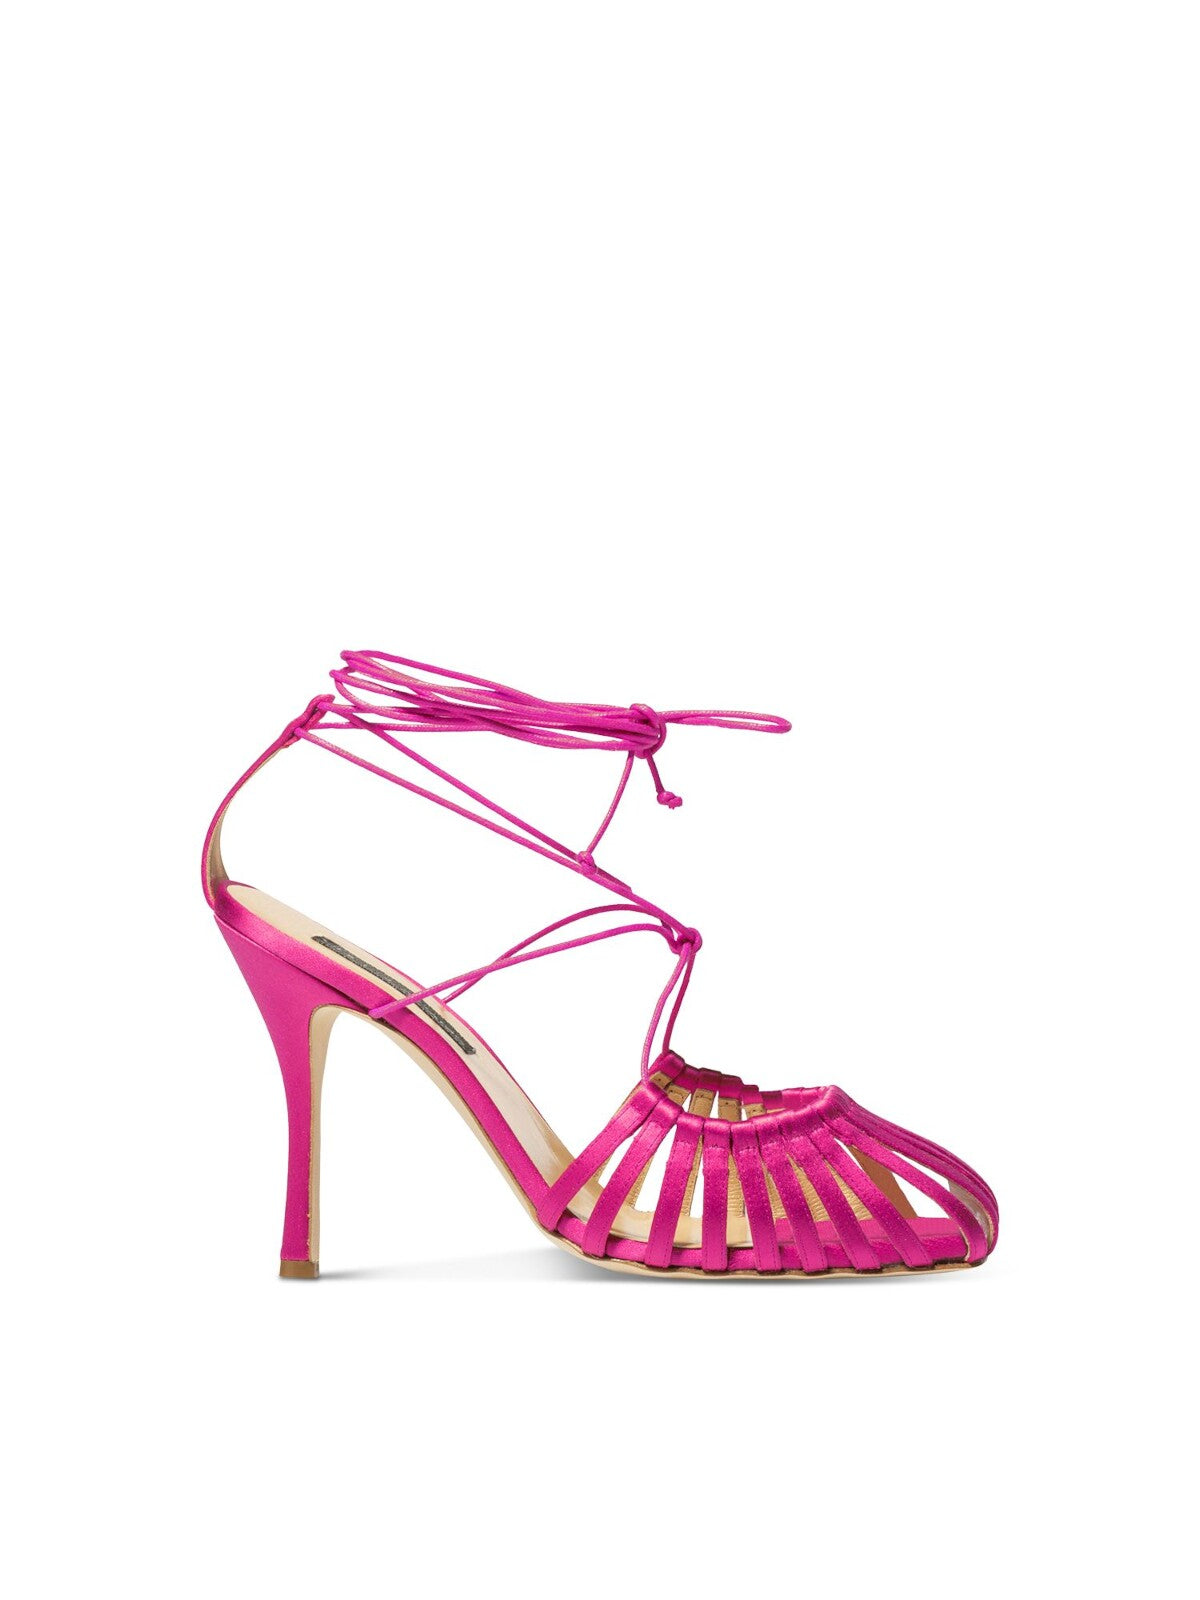 CHELSEA PARIS Womens Pink Strappy Finn Open Toe Stiletto Lace-Up Leather Dress Pumps Shoes 36.5